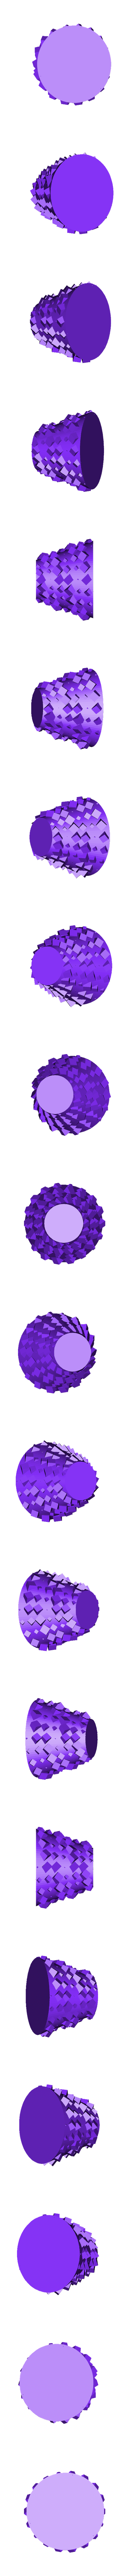 cubeSineSpiralVase01.stl Download free STL file Spiral vase/tea light with helixes of sinusoidal cubes • Model to 3D print, Darkolas